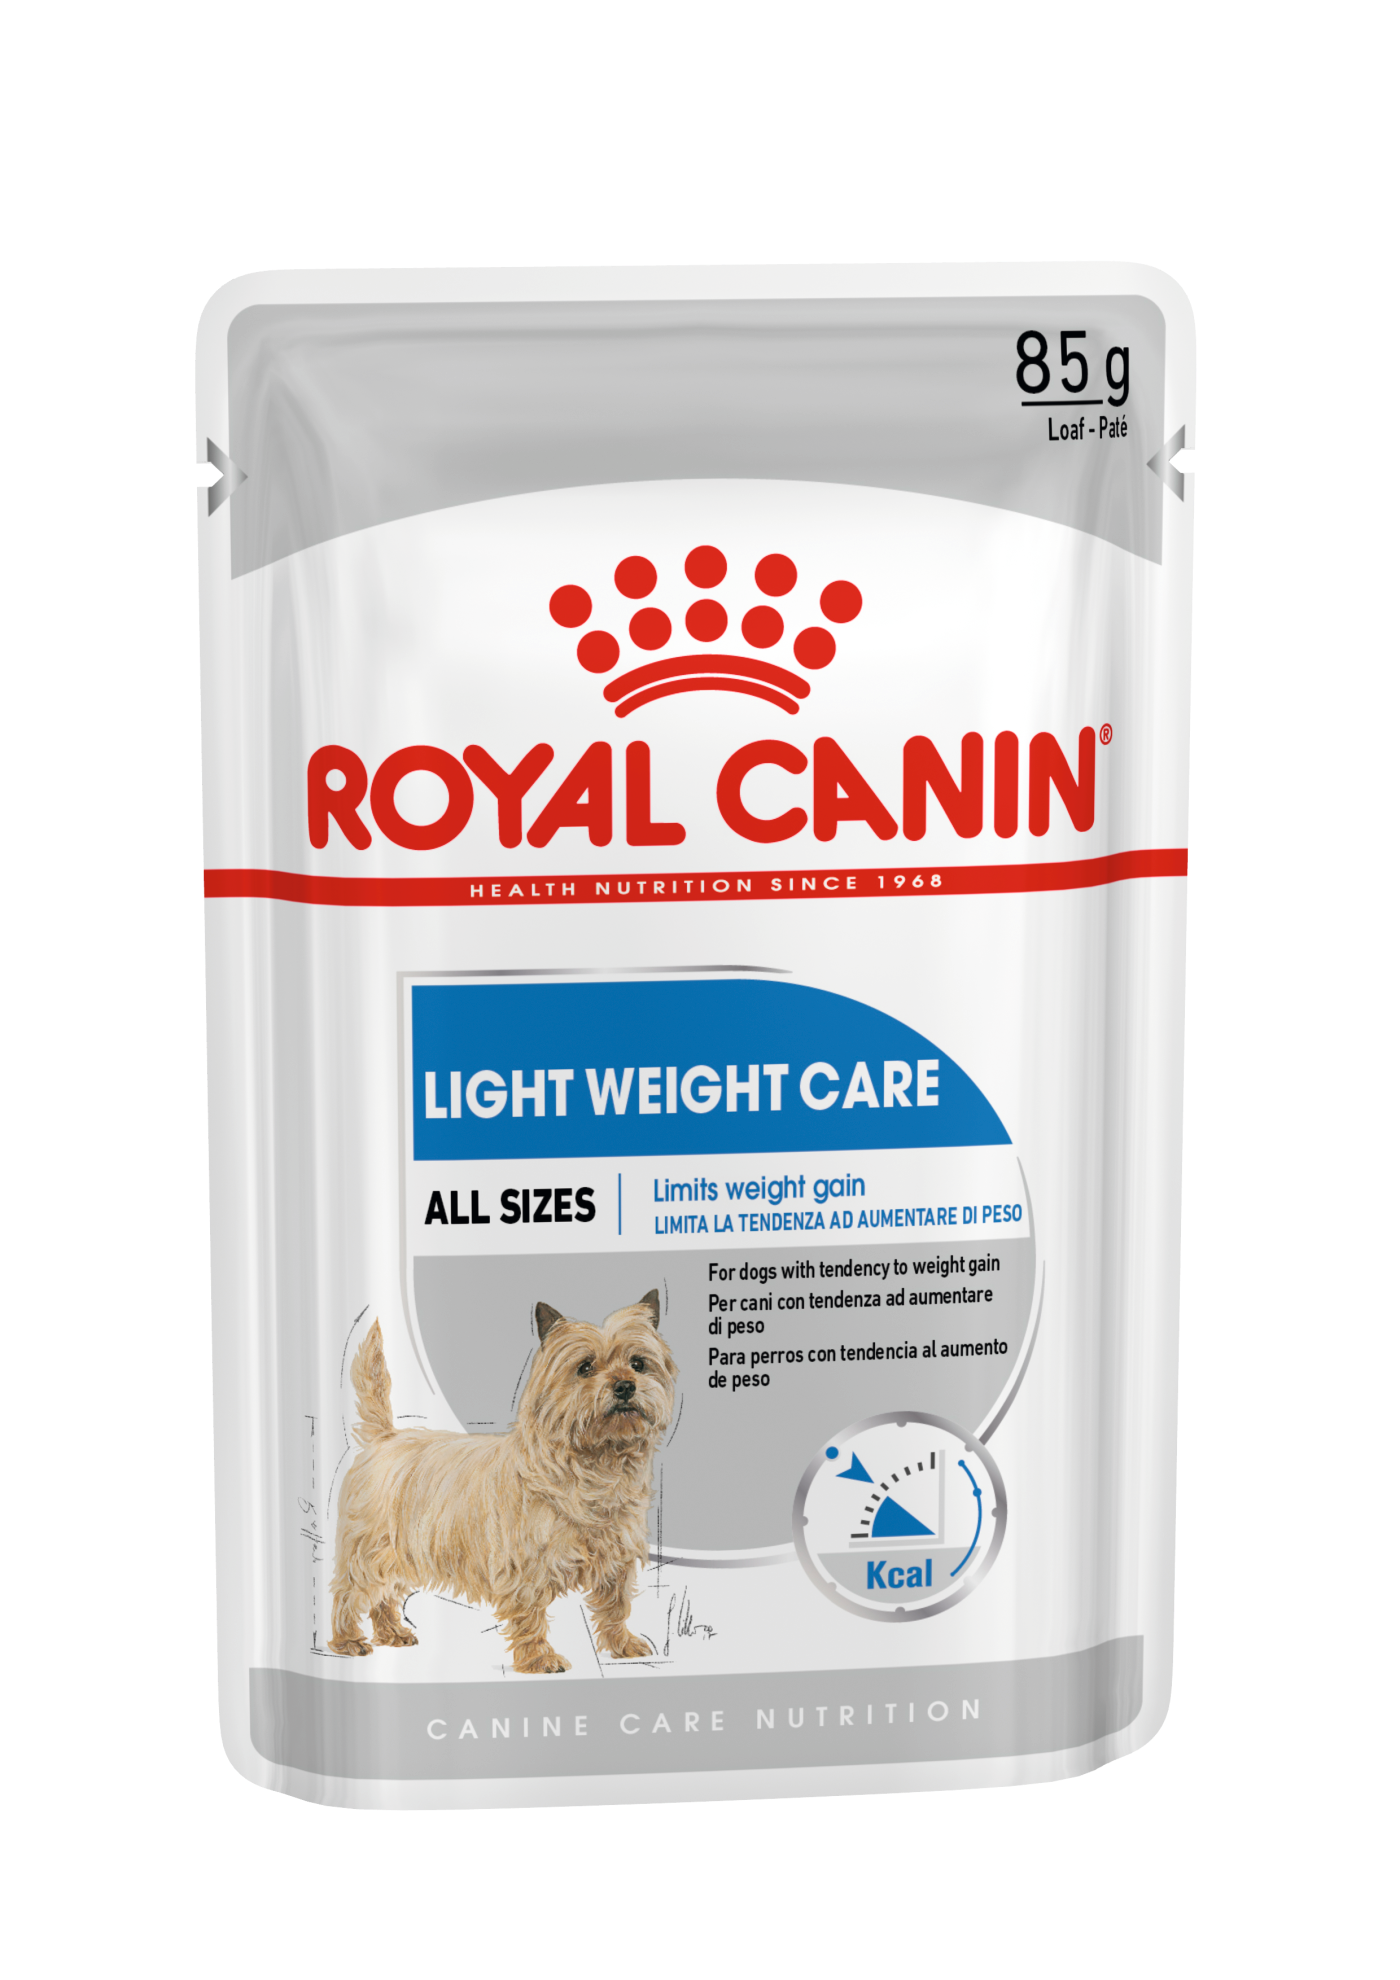 royal canin mini weight care